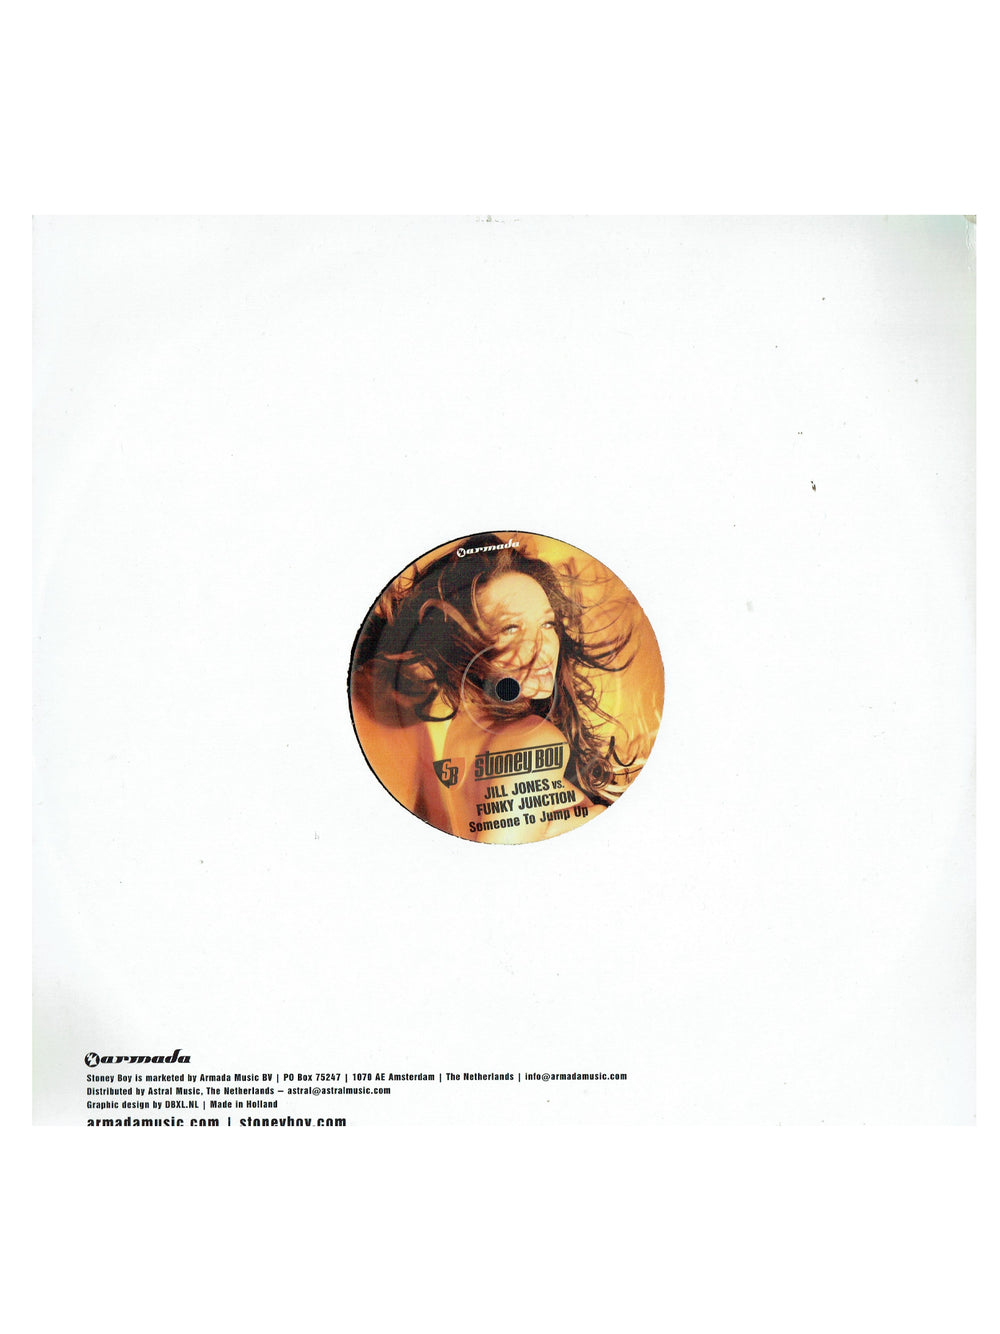 Prince – Jill Jones VS Funky Junction Someone To Jump Up Vinyl 12 Single Preloved: 2007